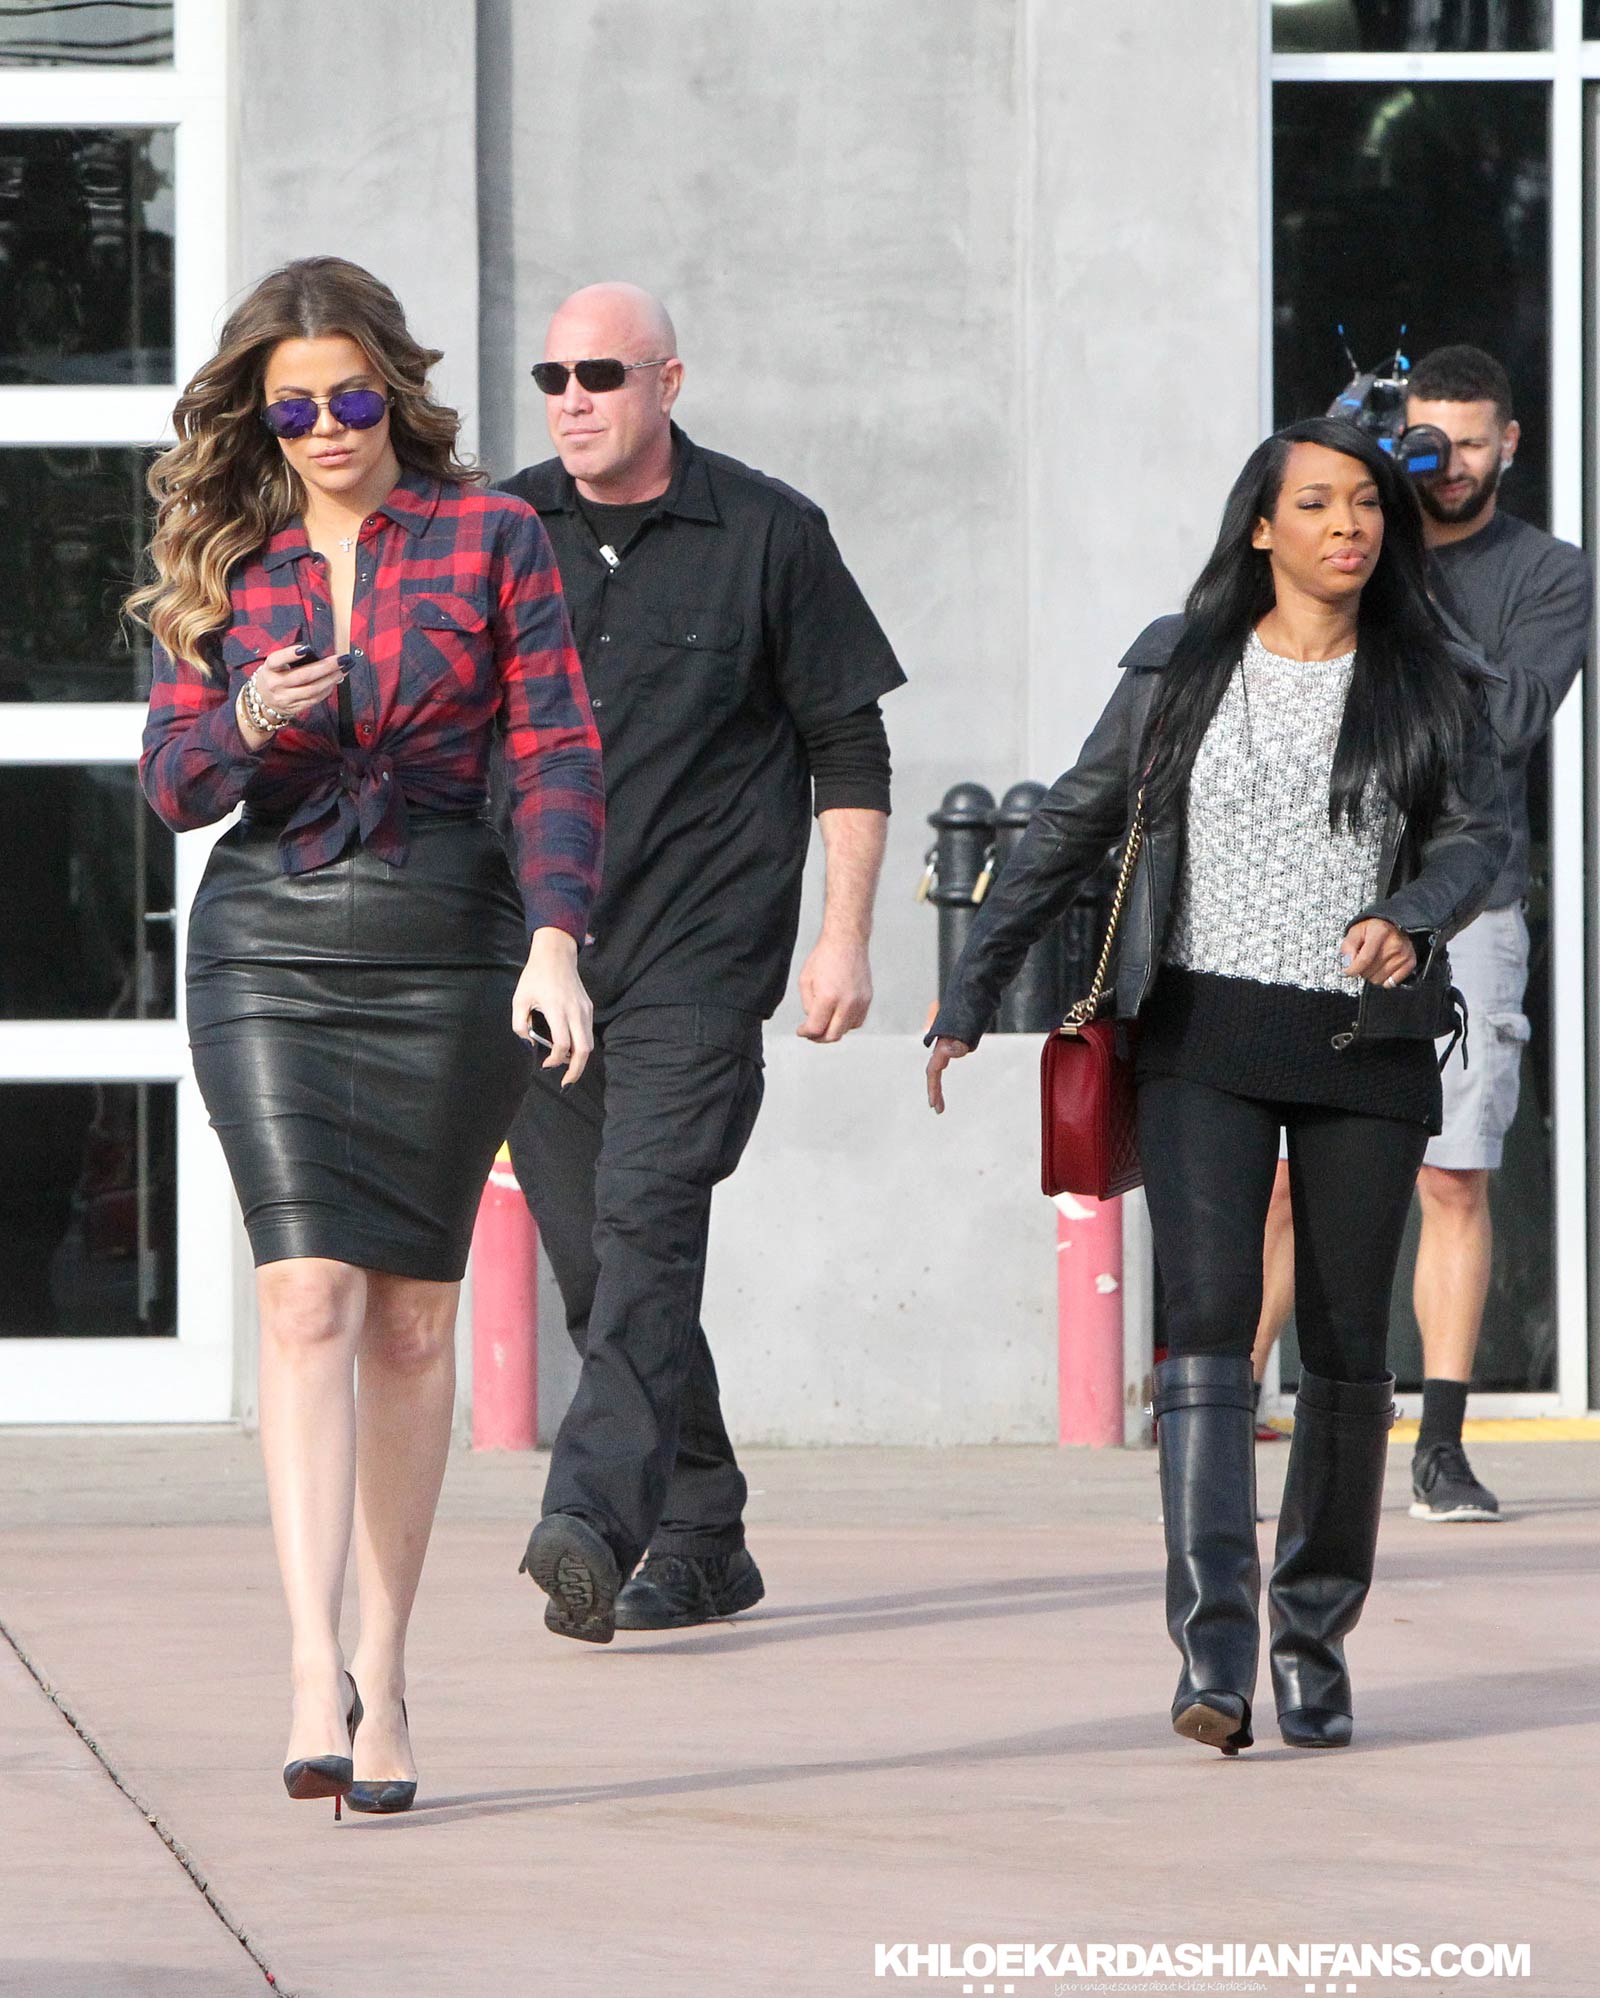 Khloe Kardashian rocks a tight black leather skirt while filming in Calabasas